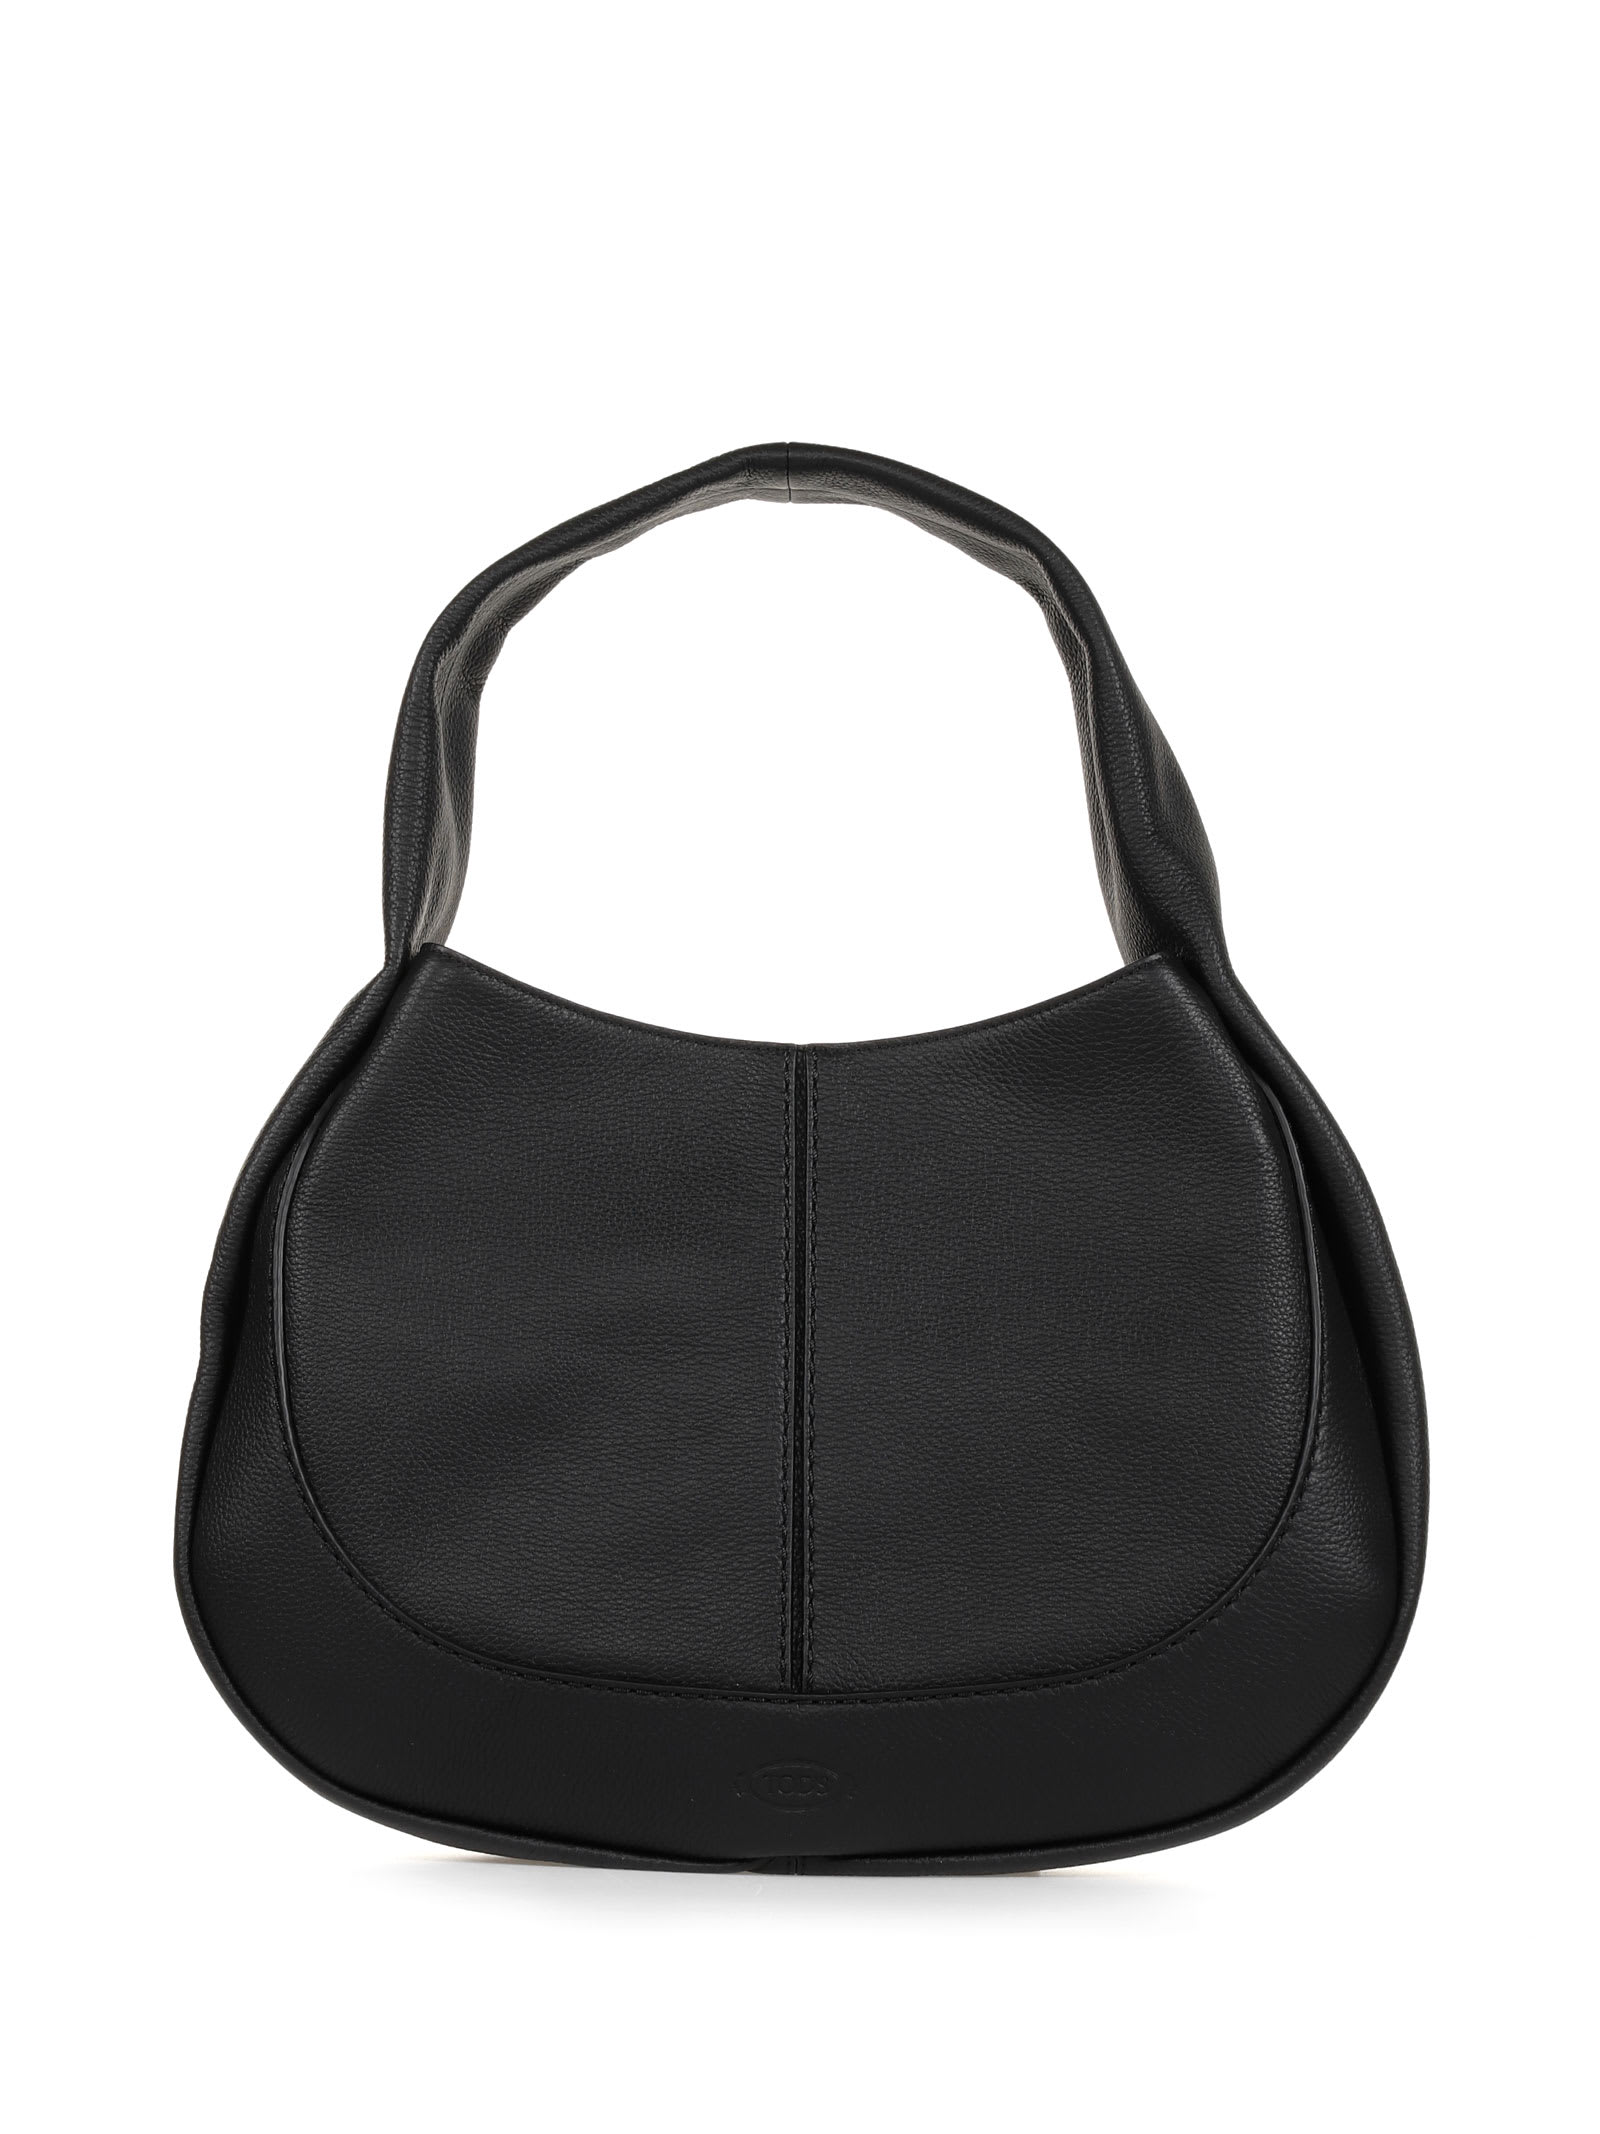 Tods Black Leather Hobo Bag